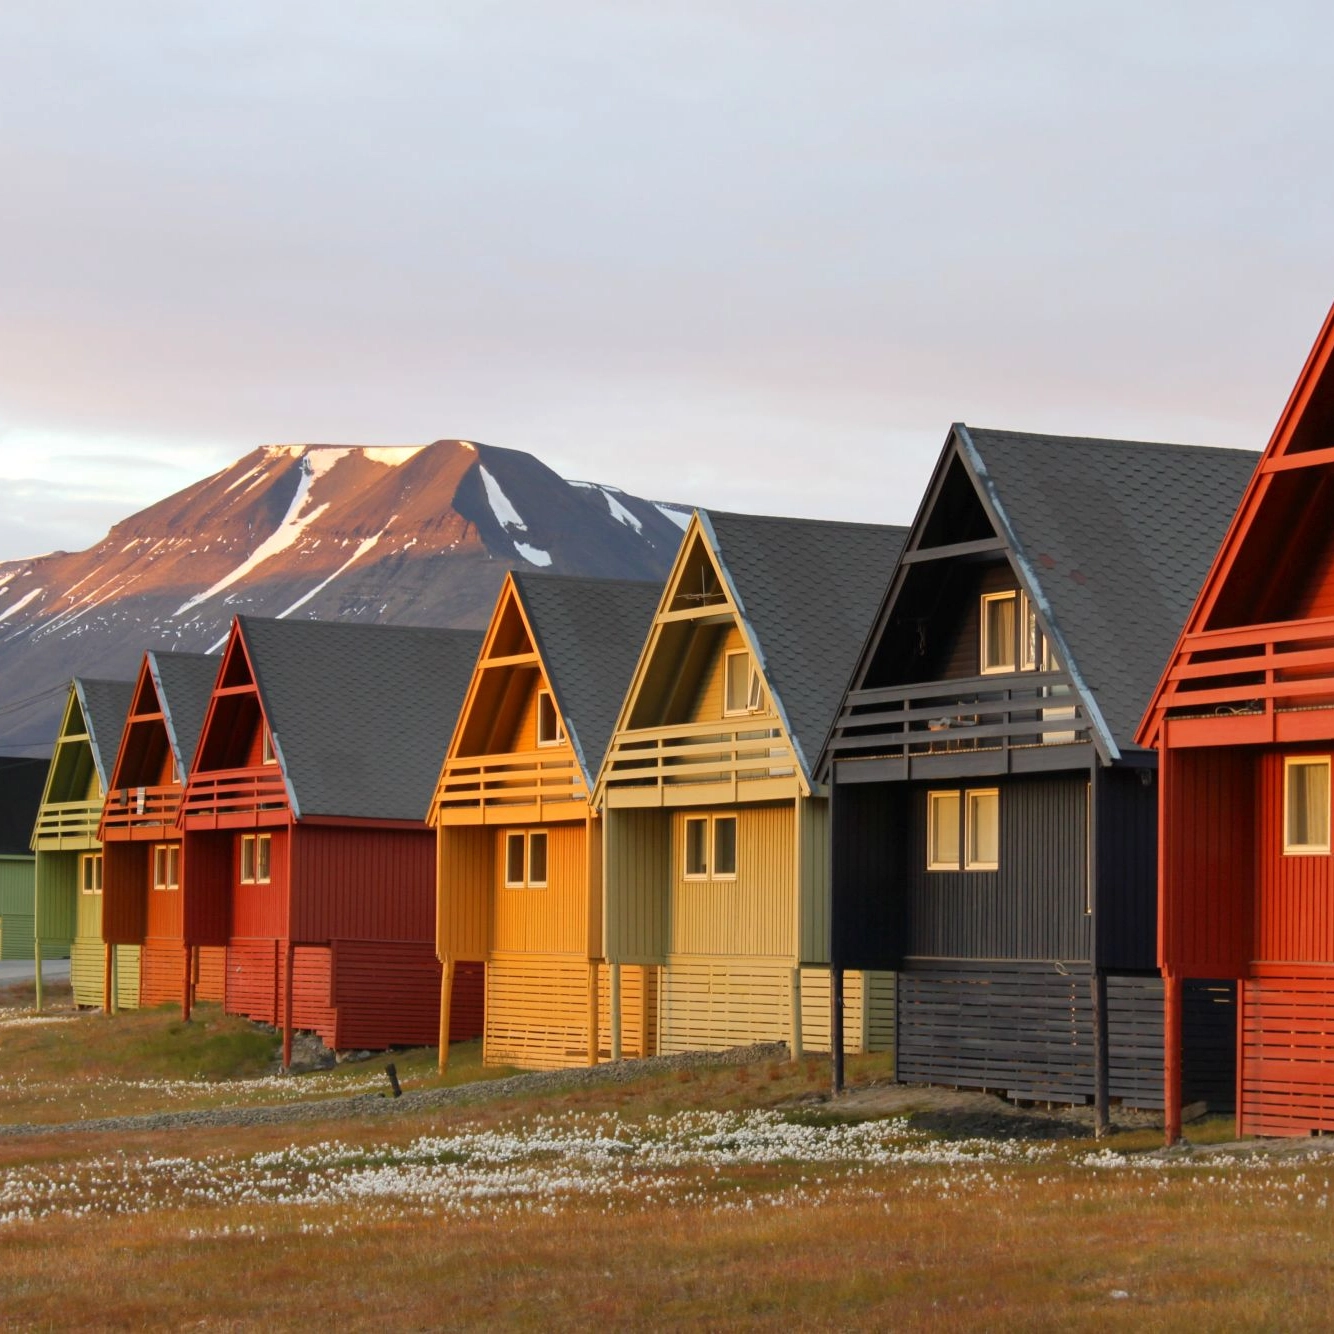 Houses in Longyearbyen, Svalbard - Norway